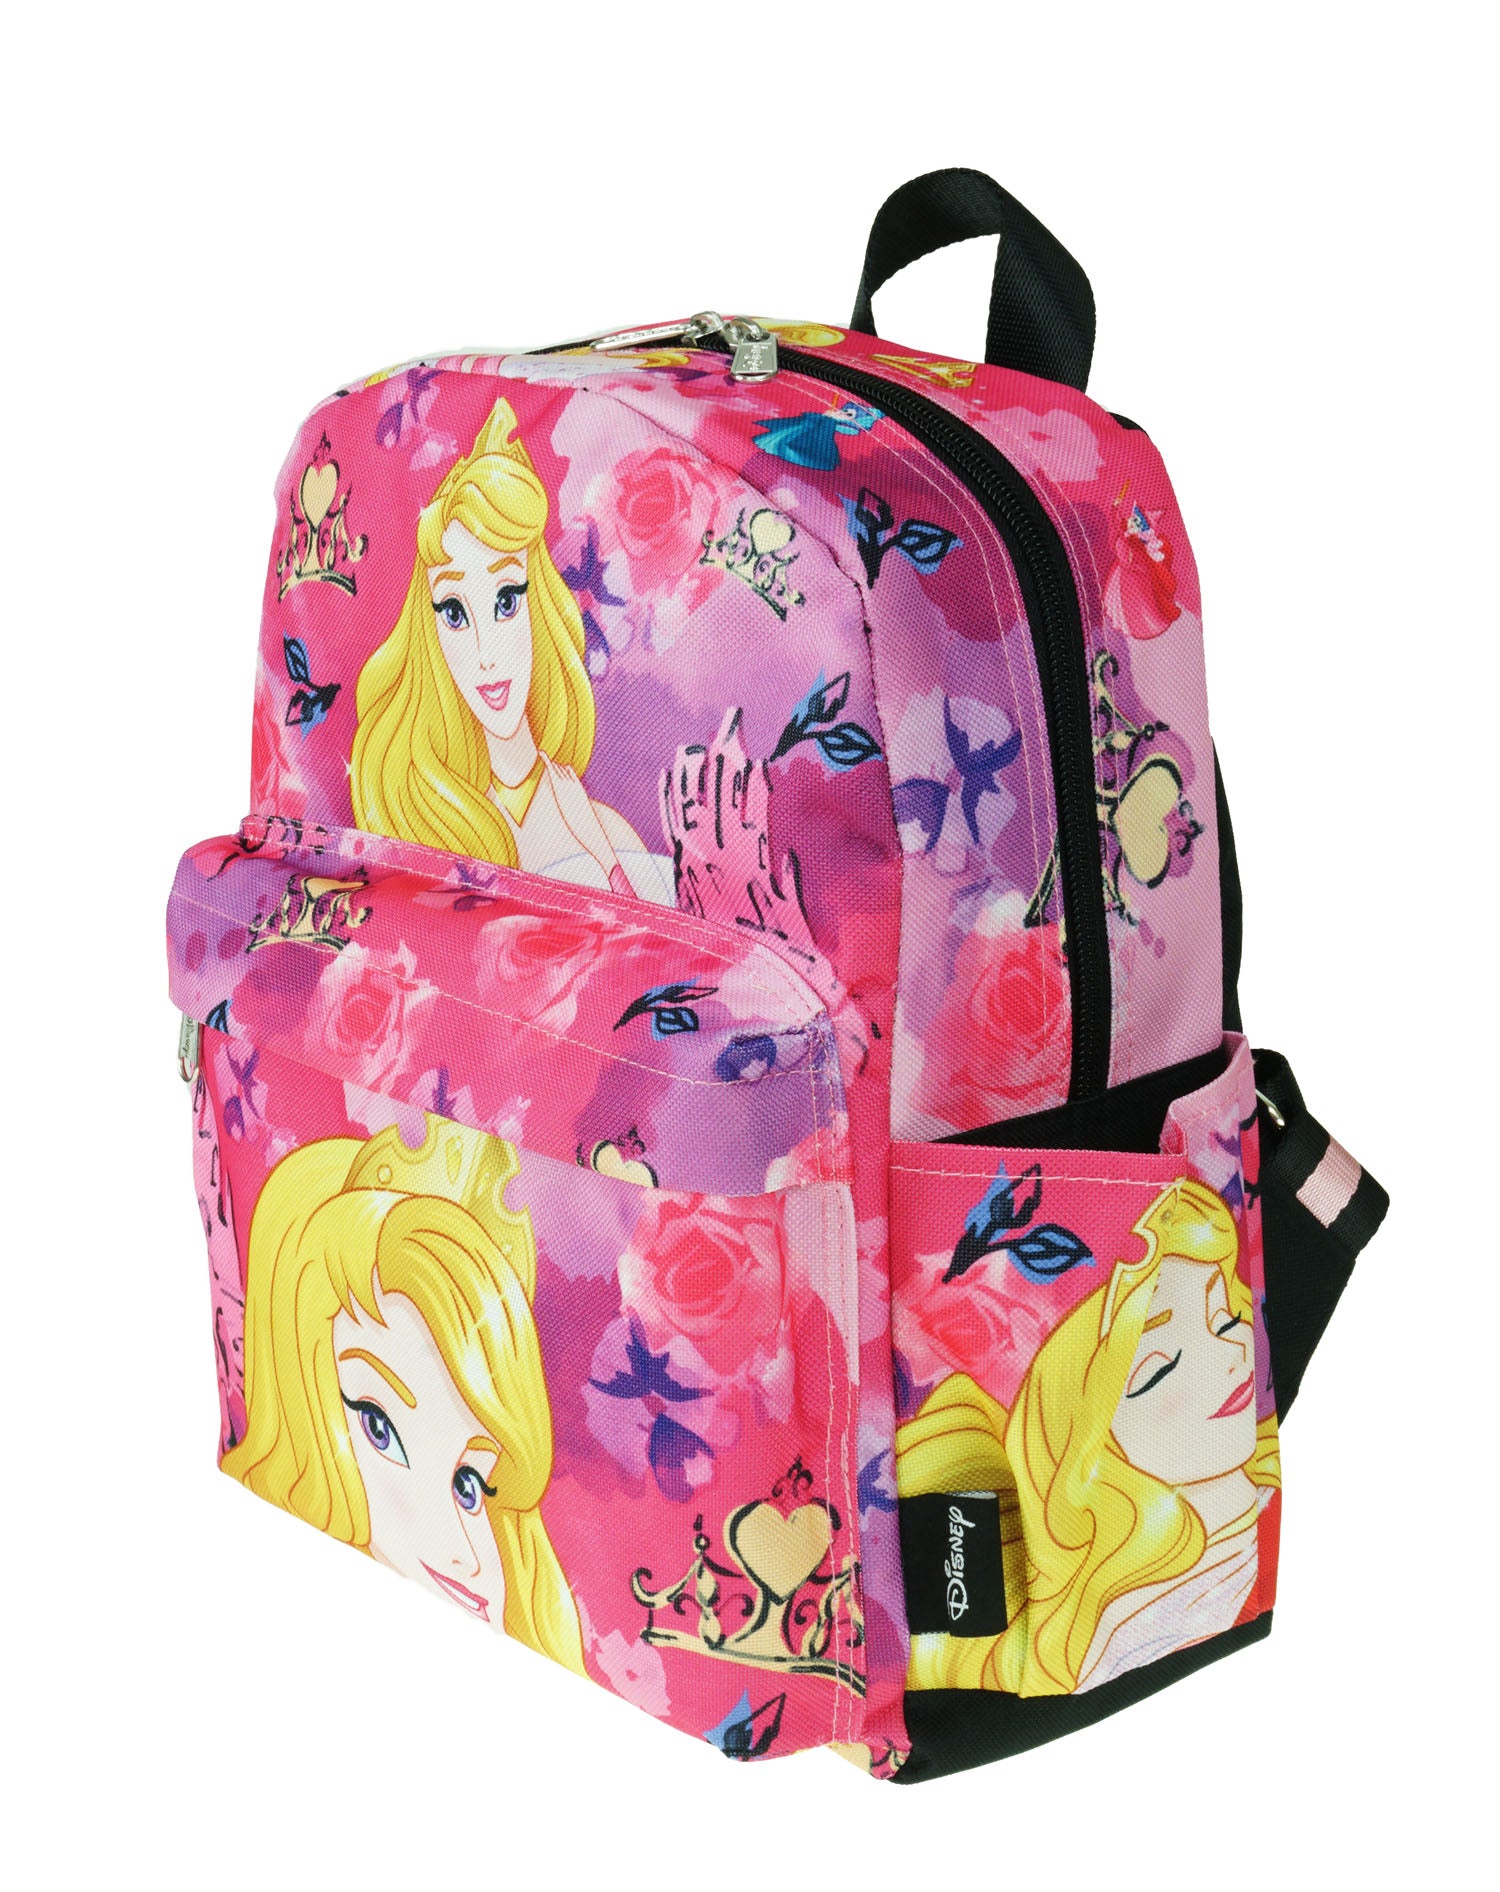 Sleeping Beauty Deluxe Backpack 12 – Stop By Oe!